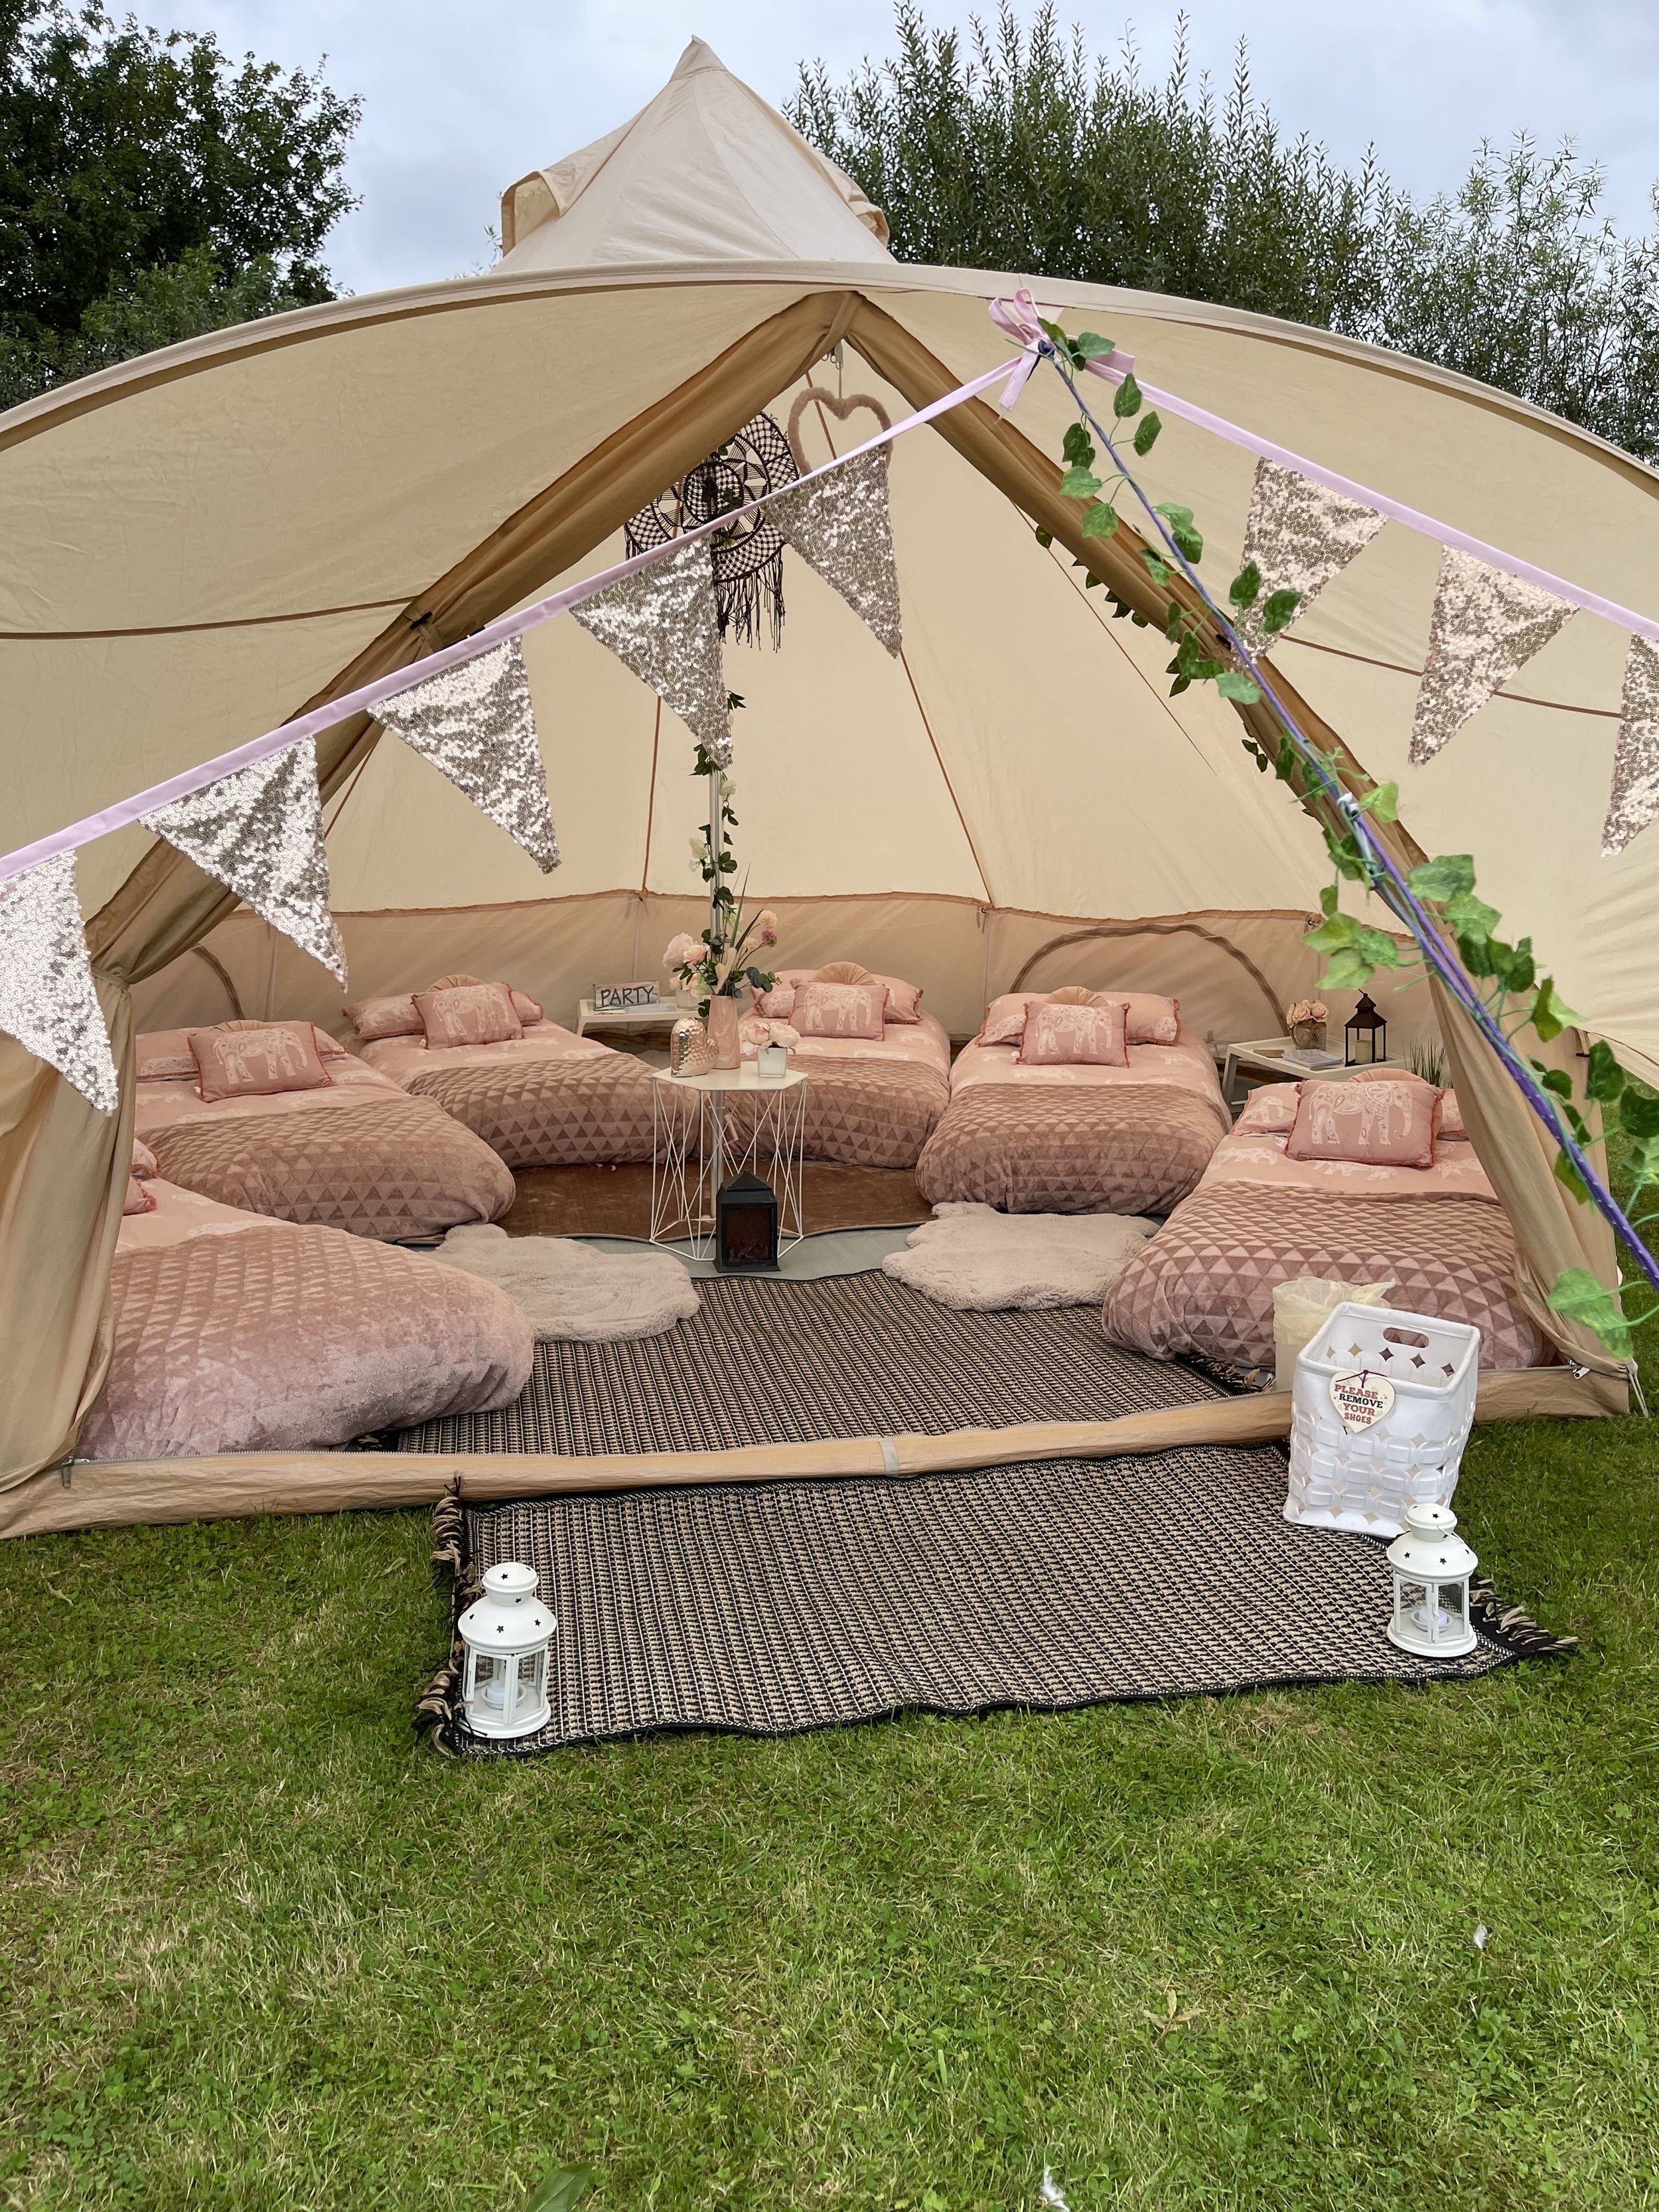 Parteepee Adventures - Sleepover Party Tents in Rutland